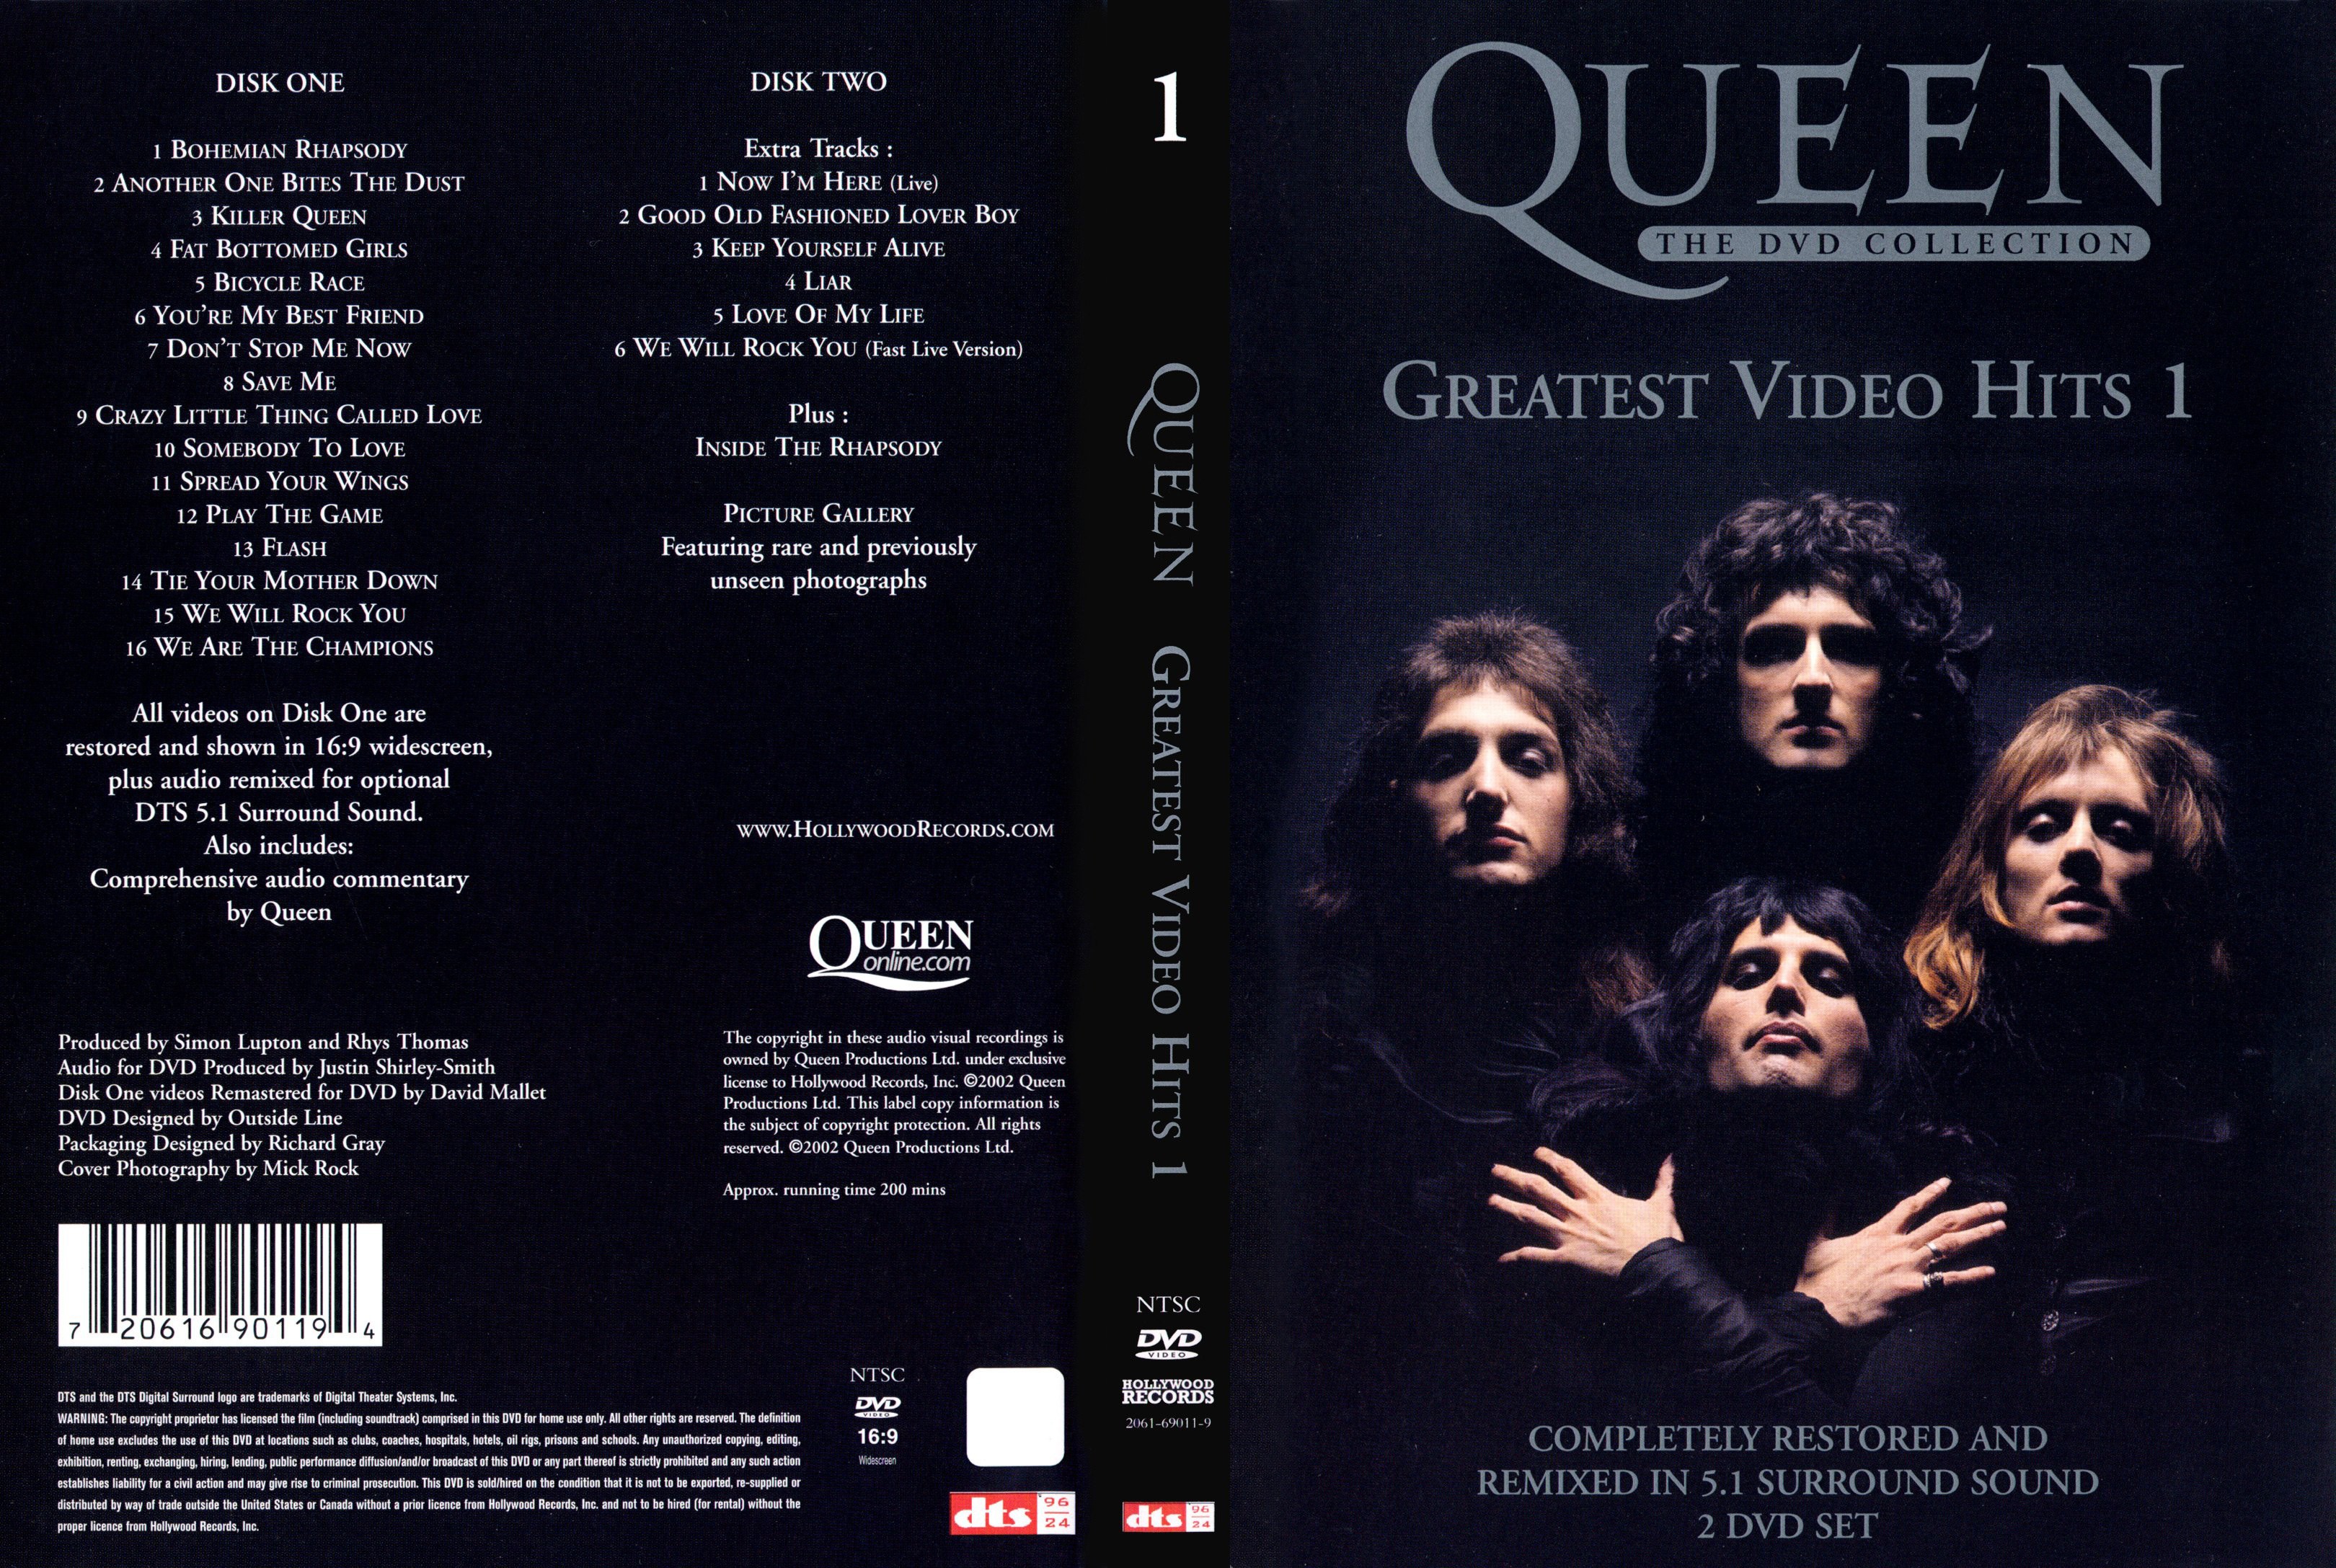 Jaquette DVD Queen Greates Hits vol 1